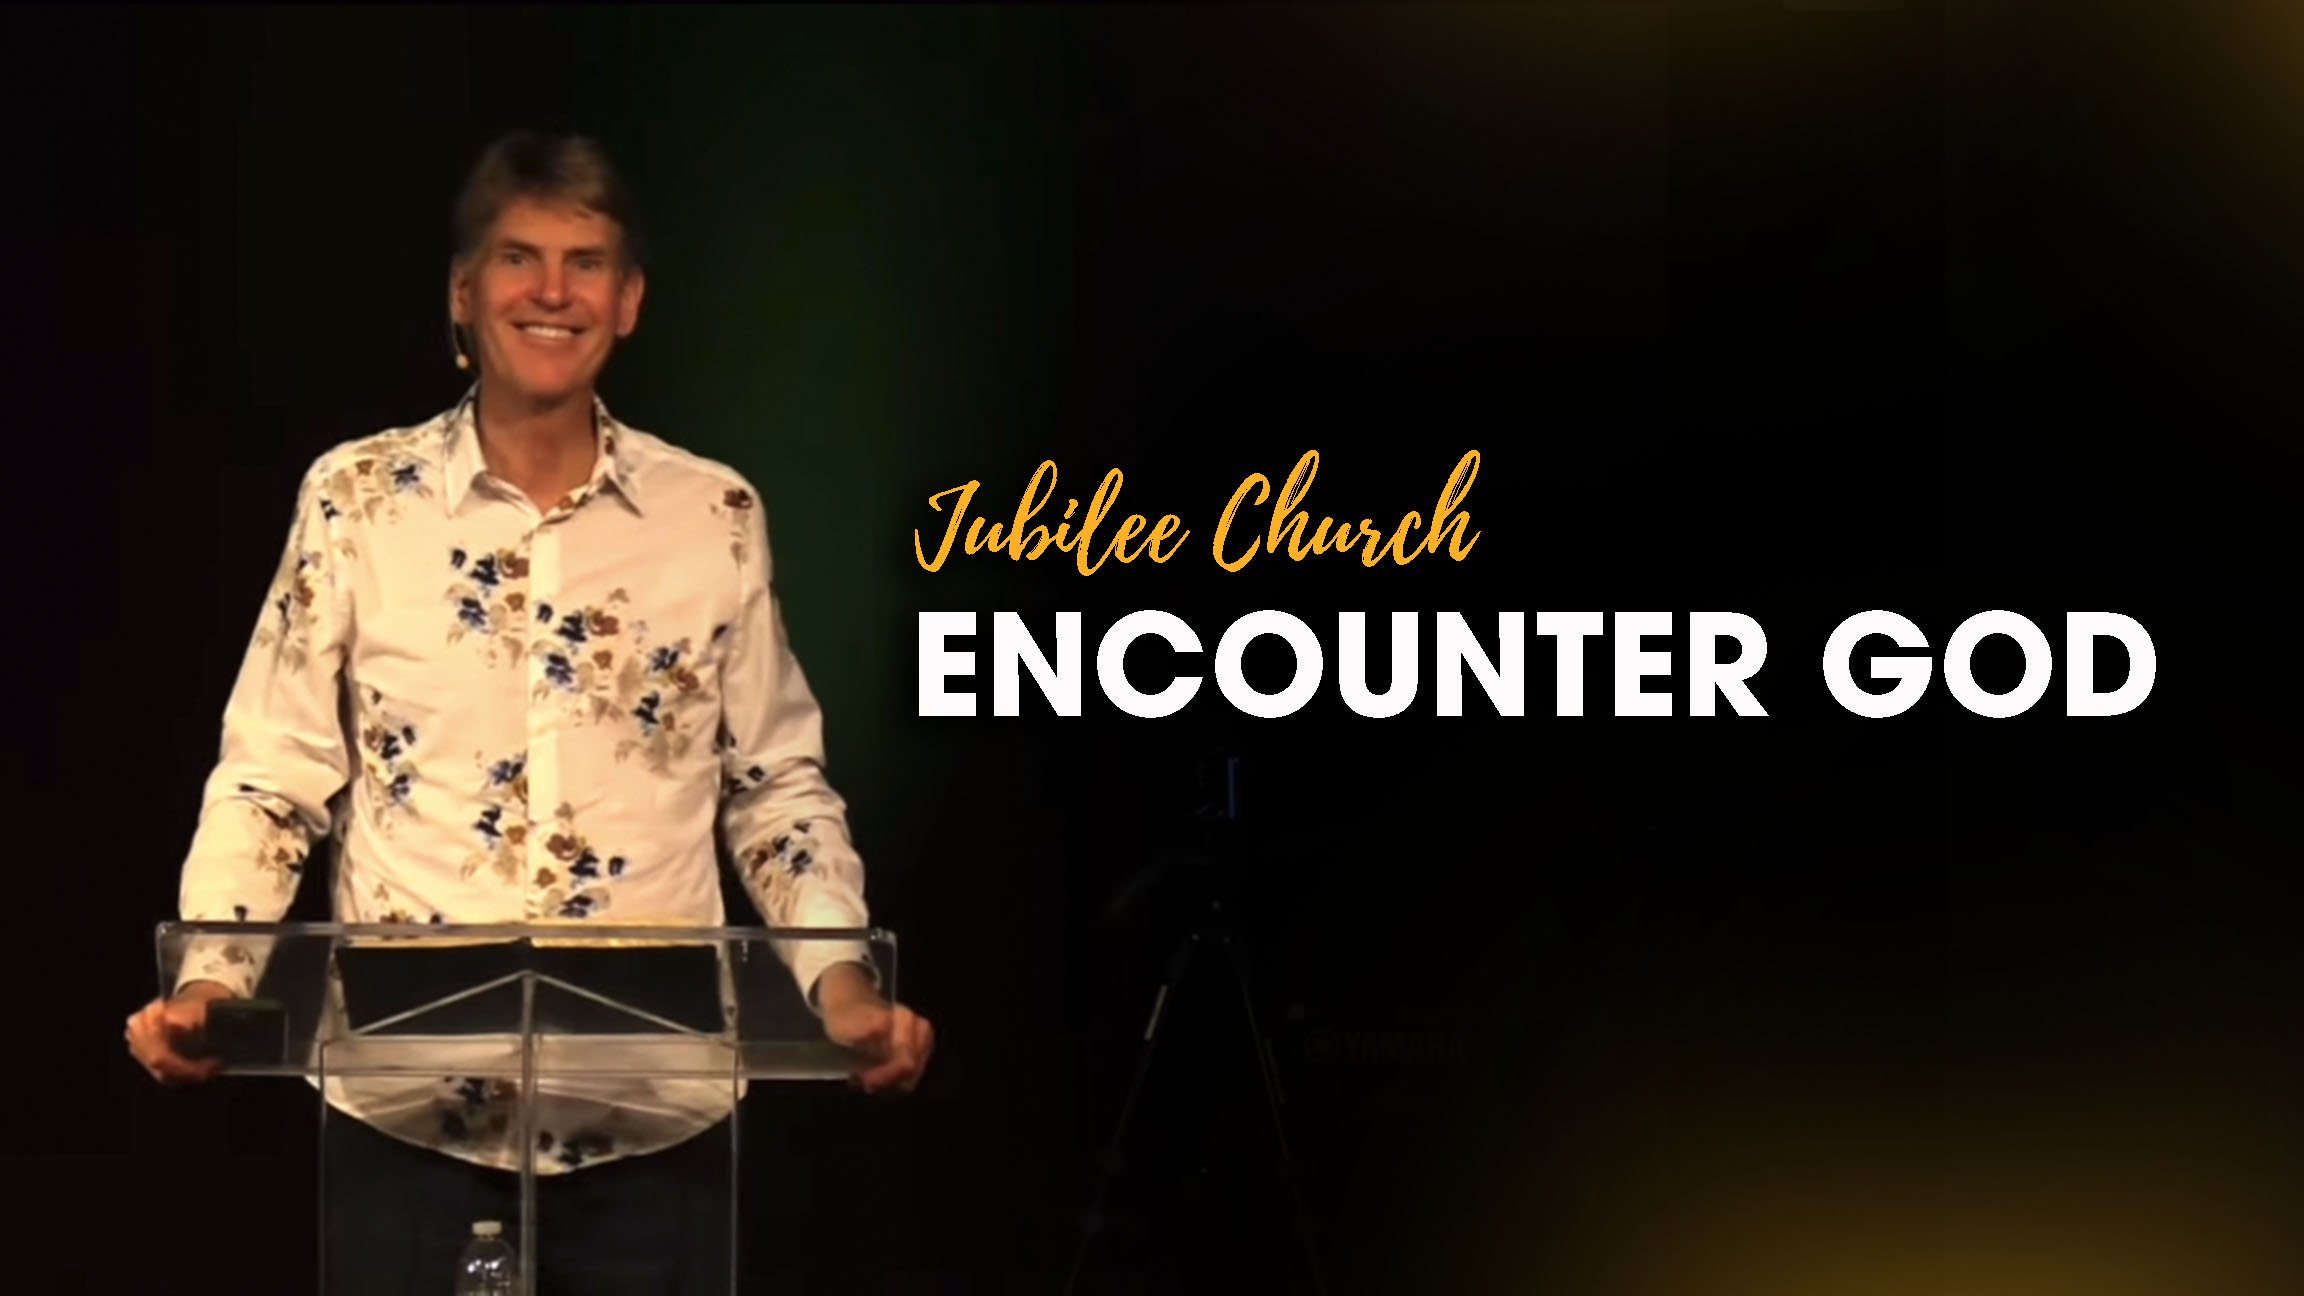 Encounter God Service